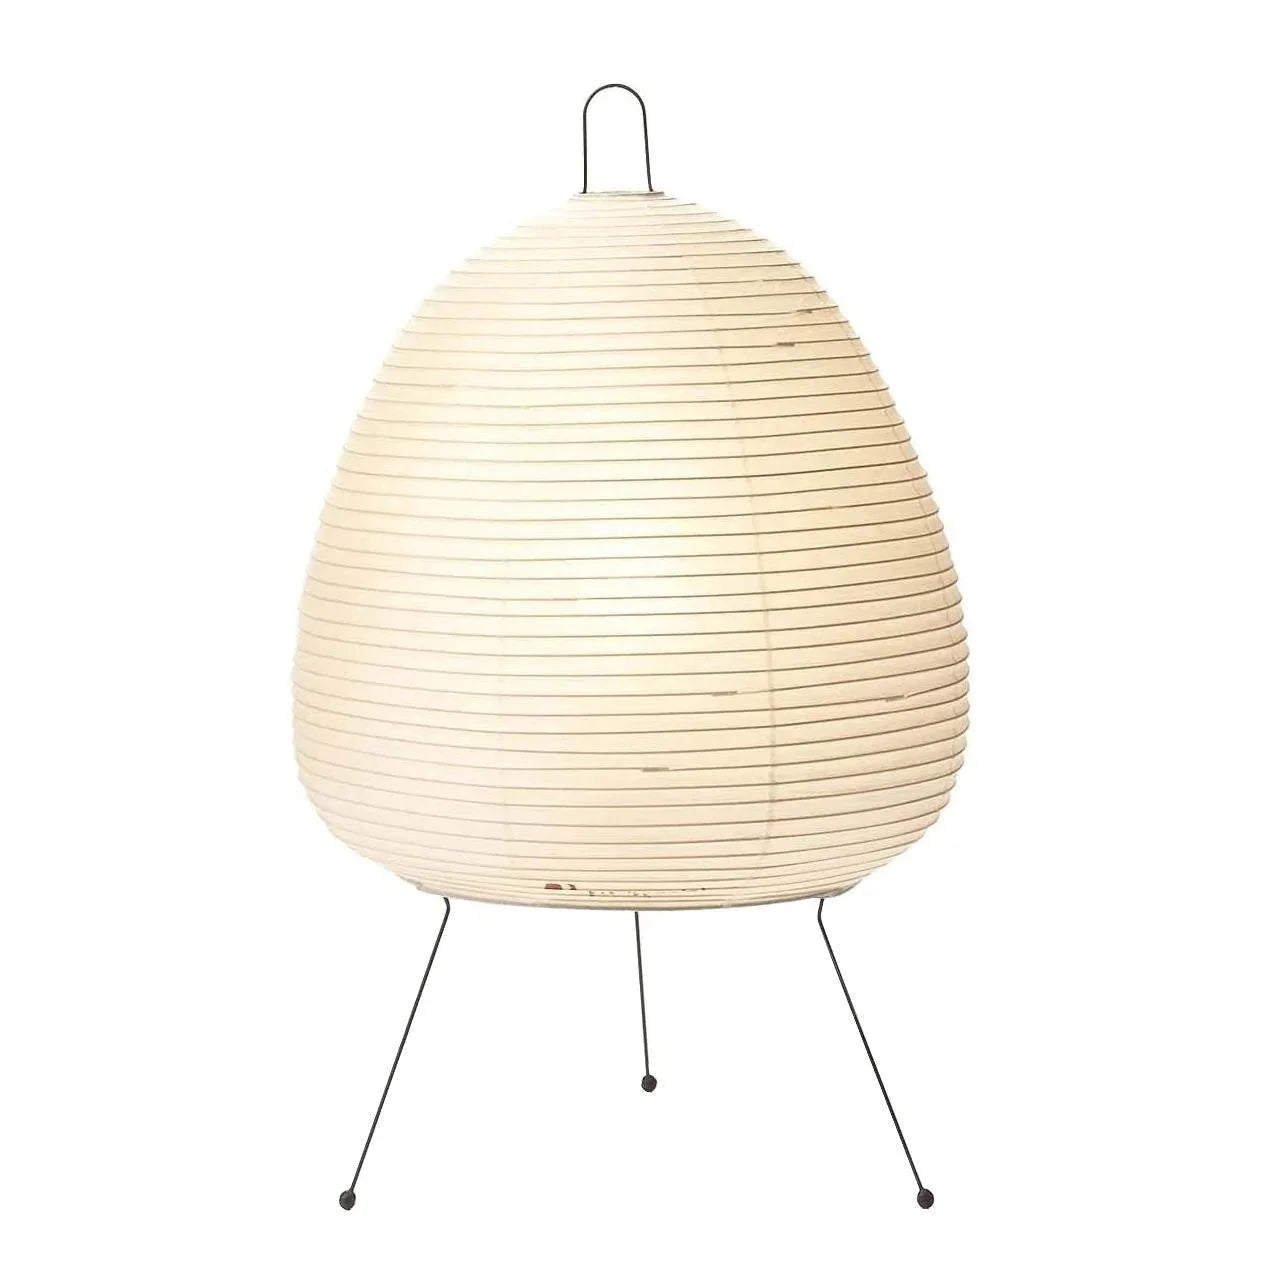 Noguchi Lamp | Akari 1a | White Minimalism Tripod Table Light For Living Room Bedroom - Minimalist Lamps